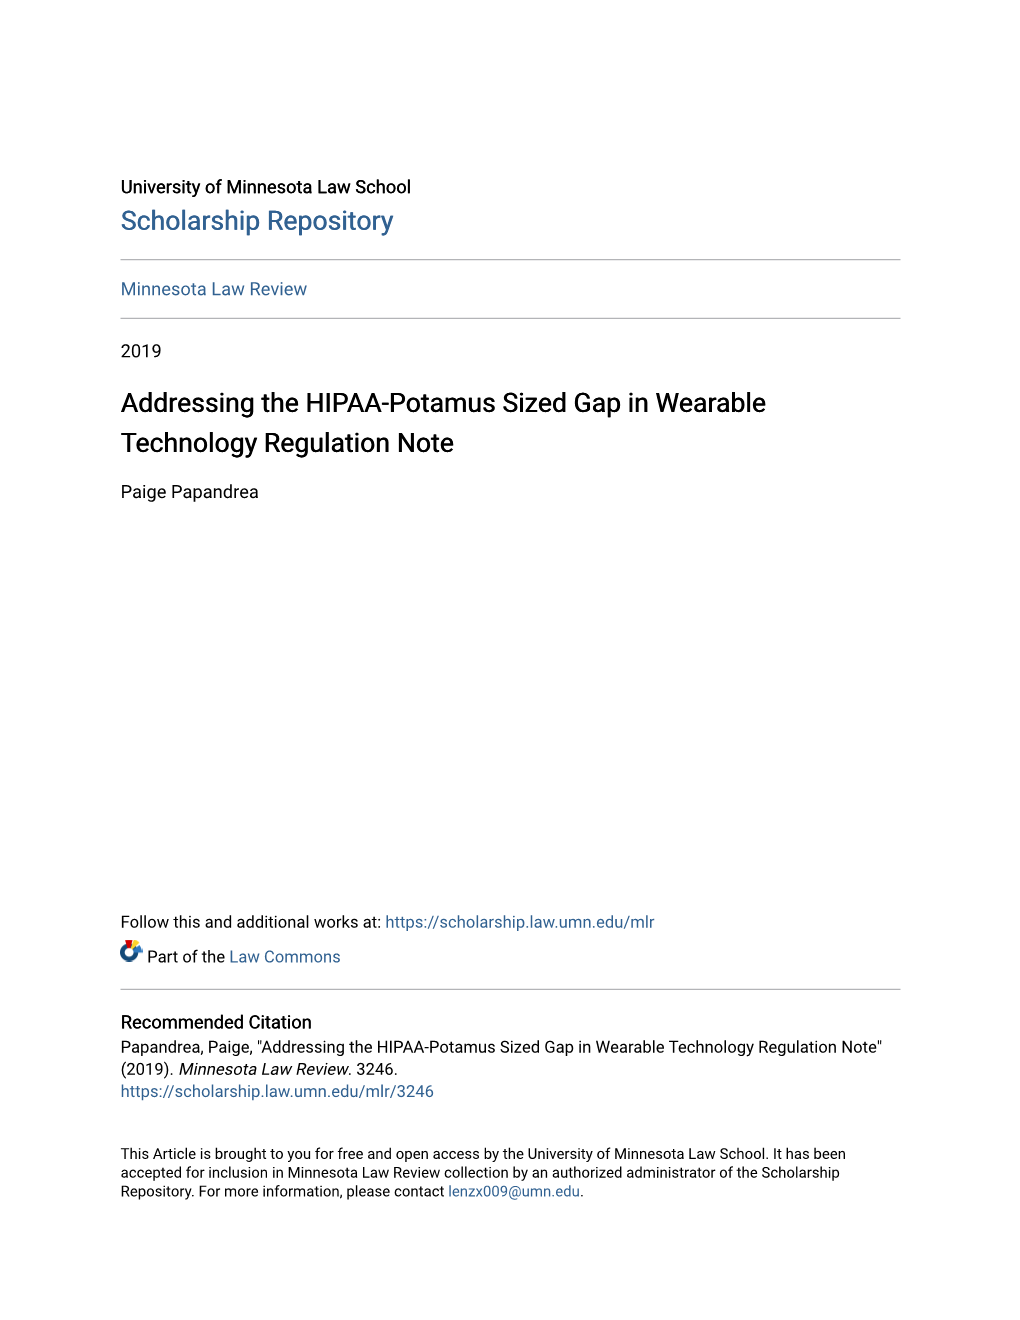 Addressing the HIPAA-Potamus Sized Gap in Wearable Technology Regulation Note